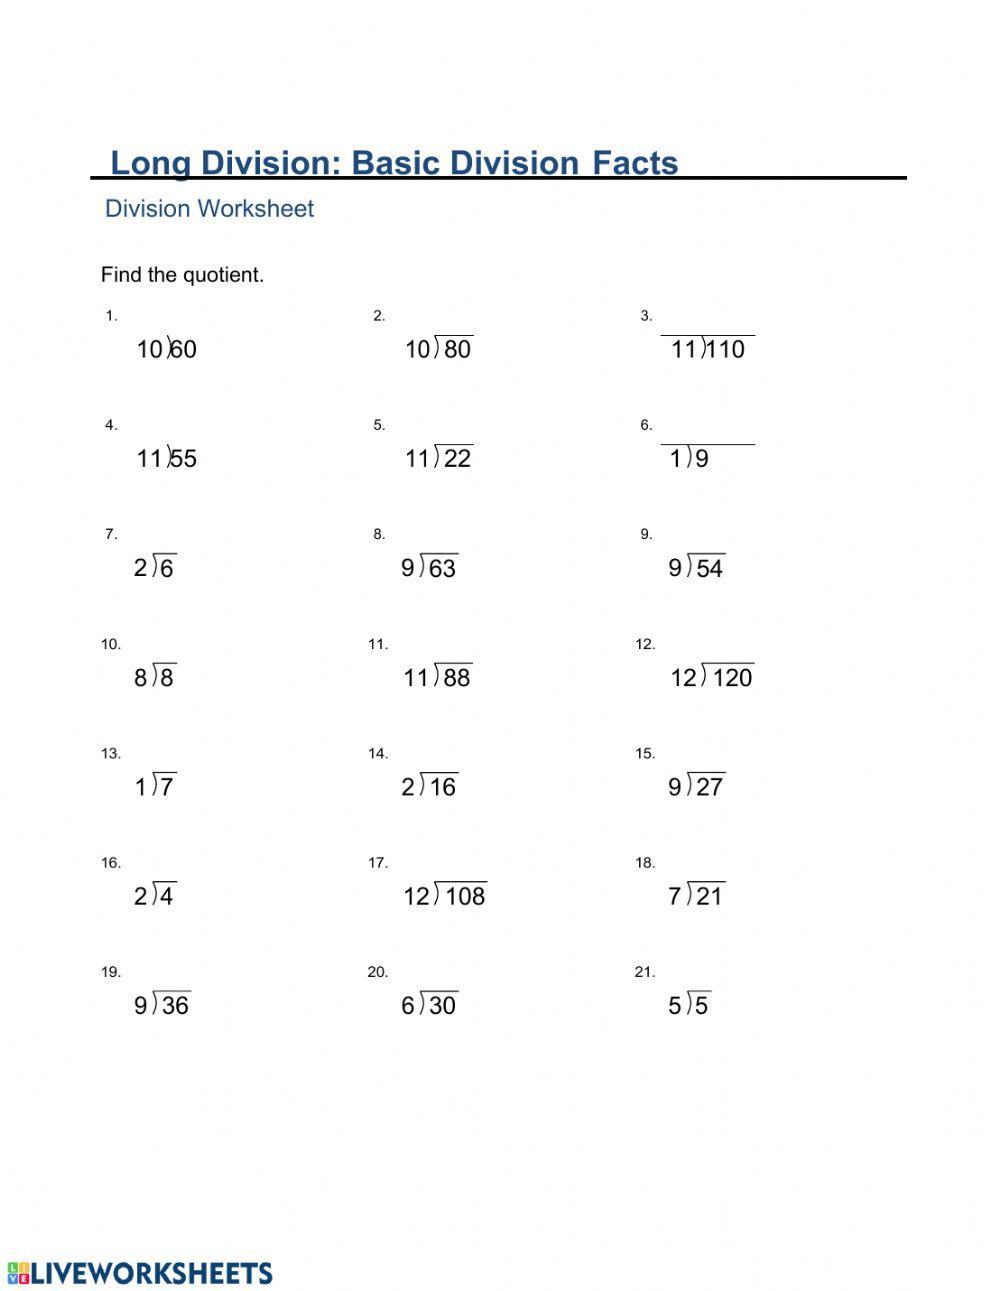 MA2-Monday (Long Division Basic Division Facts)